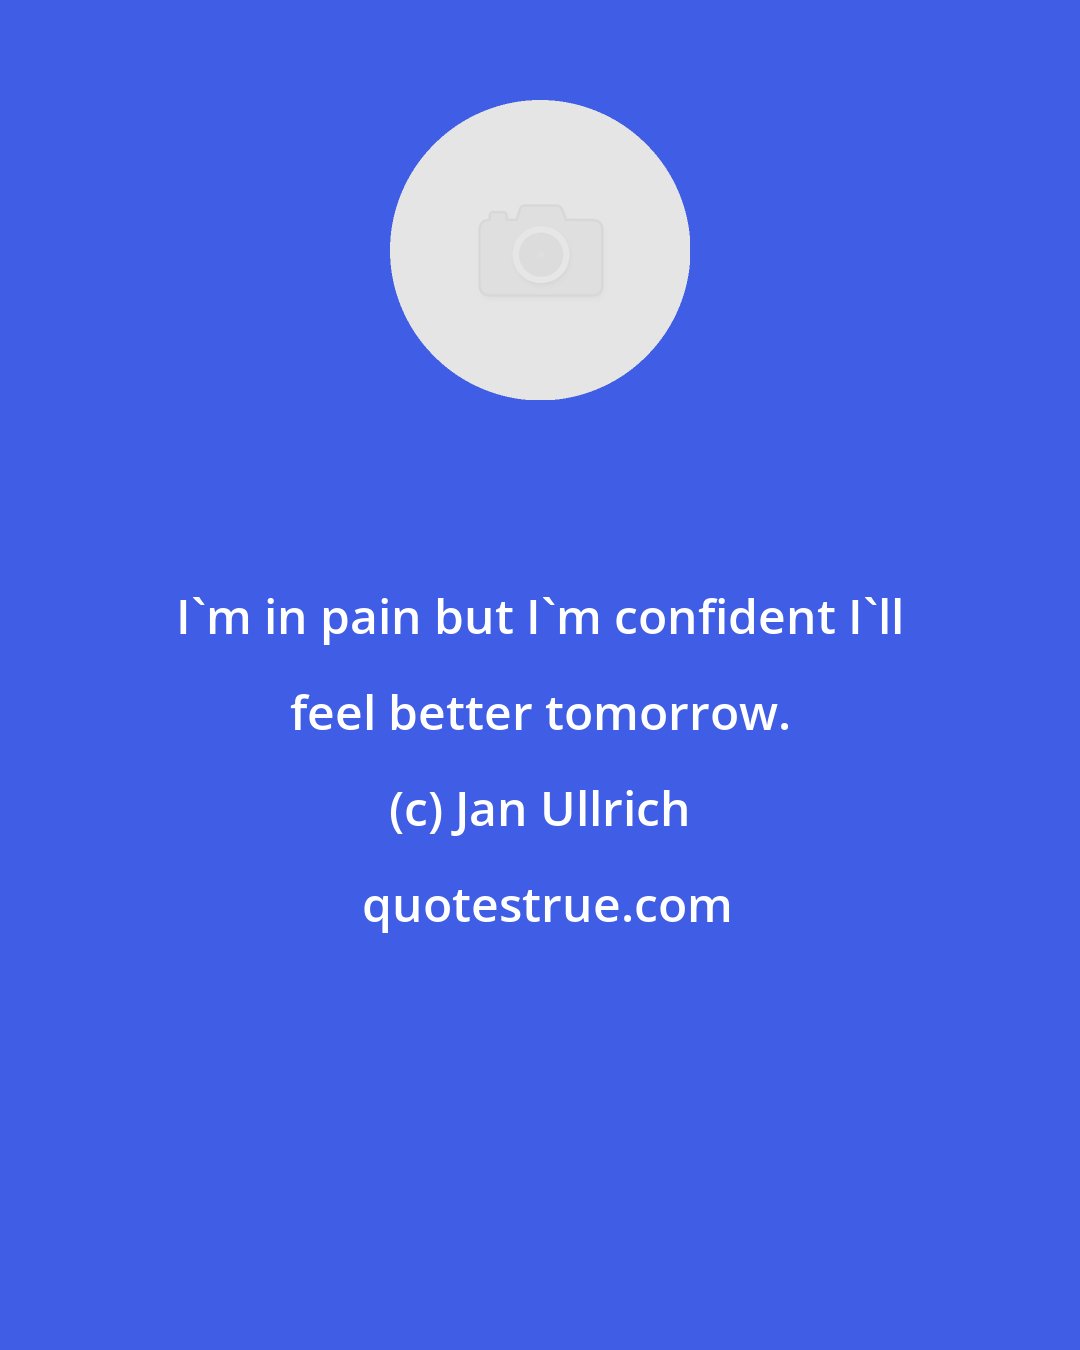 Jan Ullrich: I'm in pain but I'm confident I'll feel better tomorrow.